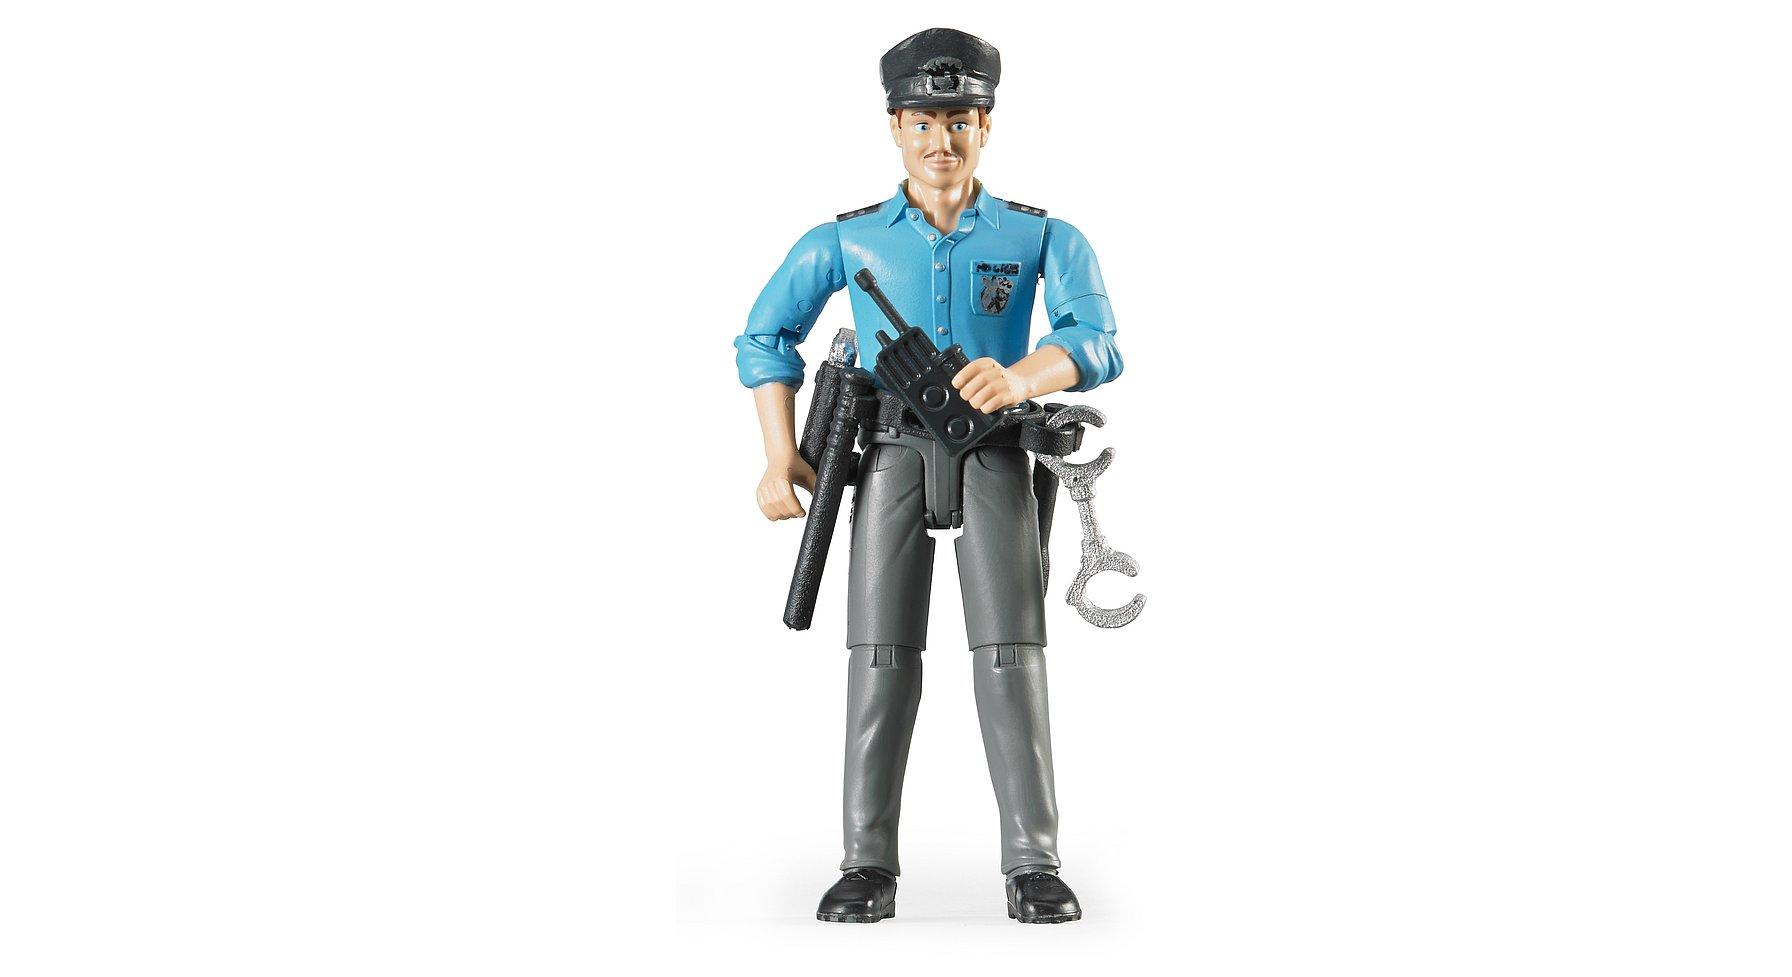 Bruder 60050 Policeman Figure Toymaster Ballina